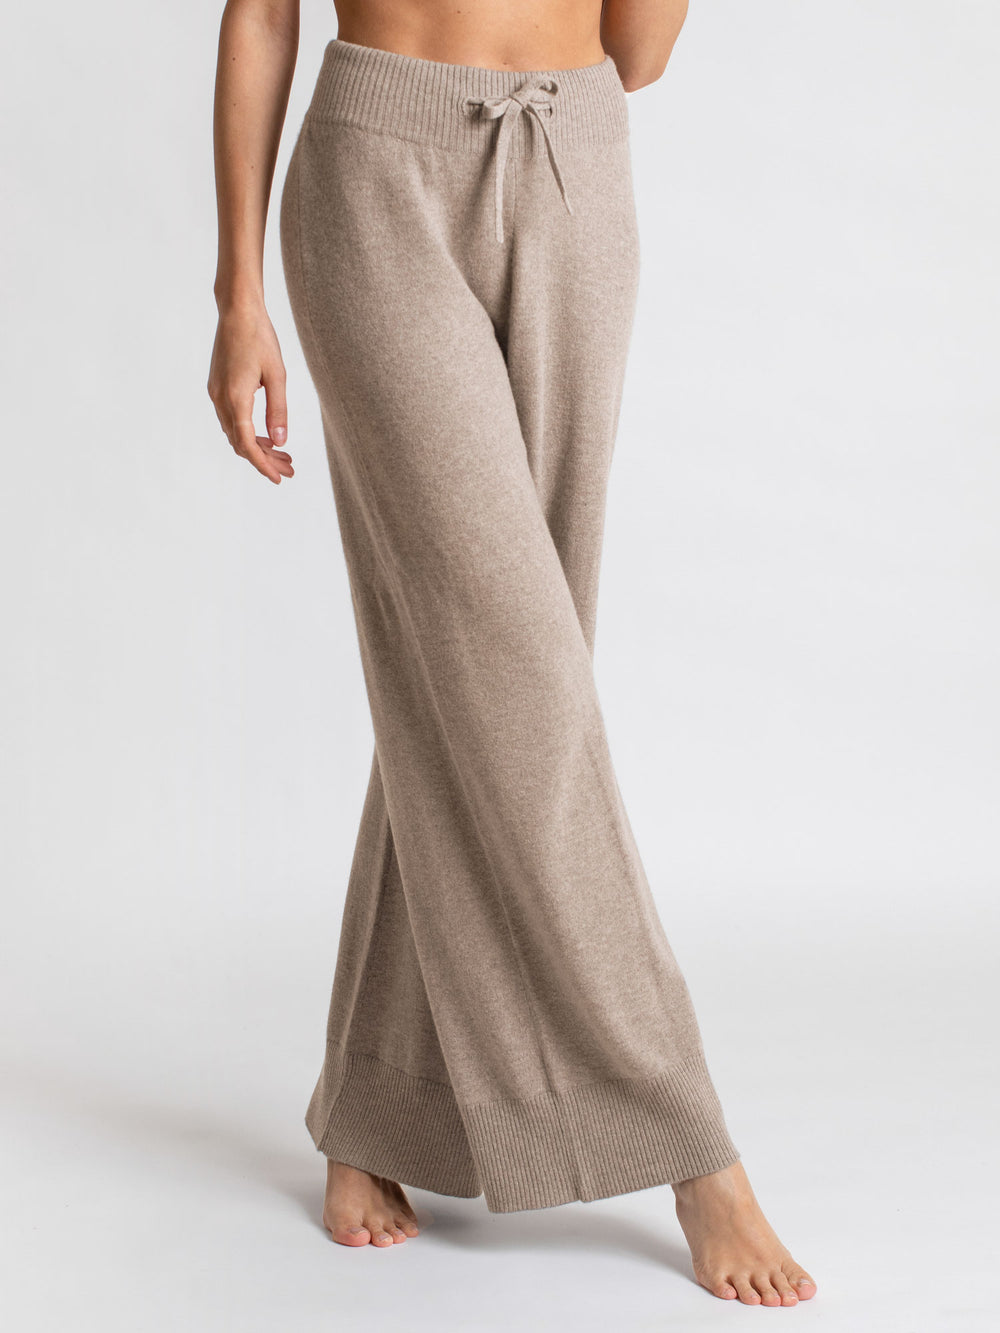 Cashmere pants "Lux Pants" in 100% pure cashmere. Color: Toast. Scandinavian design by Kashmina.